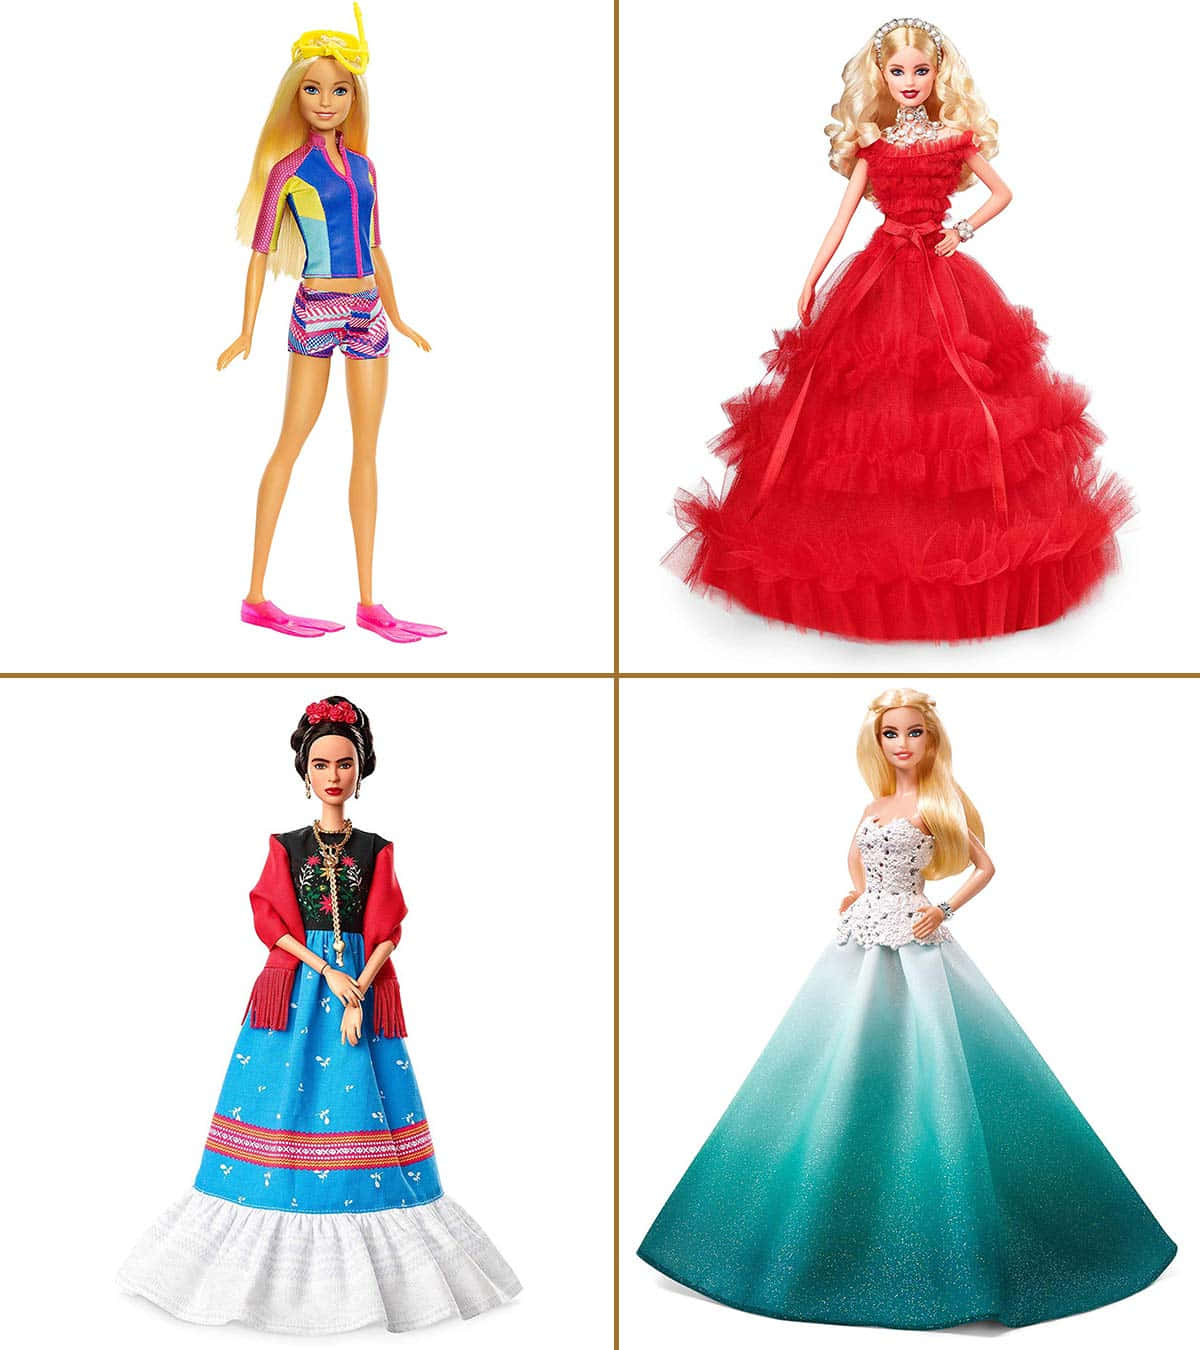 Showcasing the beauty of genuine Barbie Dolls